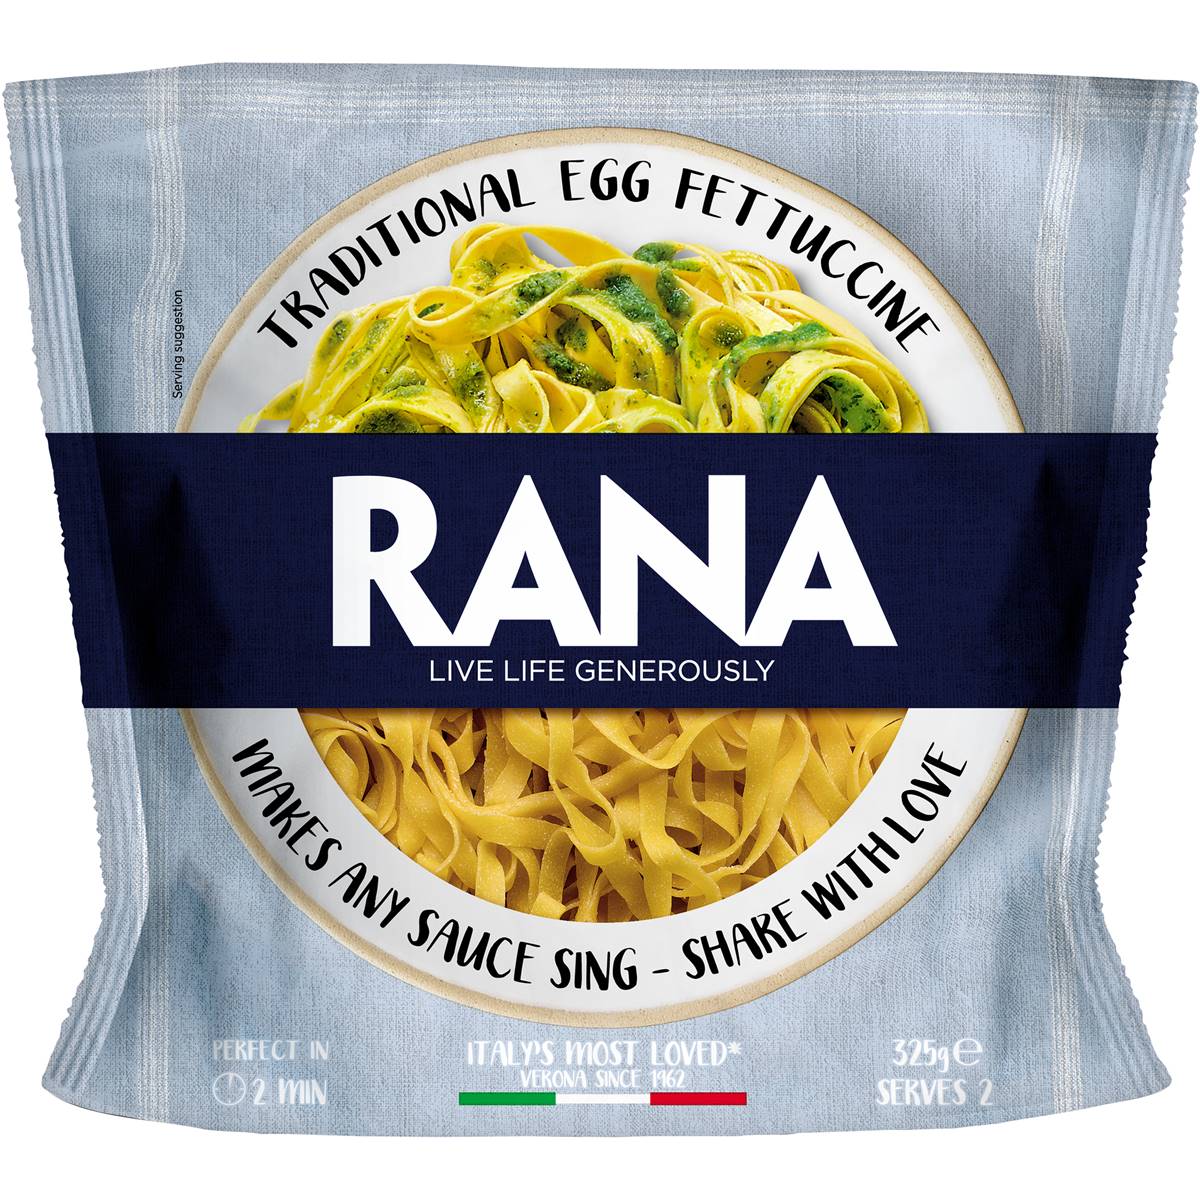 Calories in Rana Fettuccine